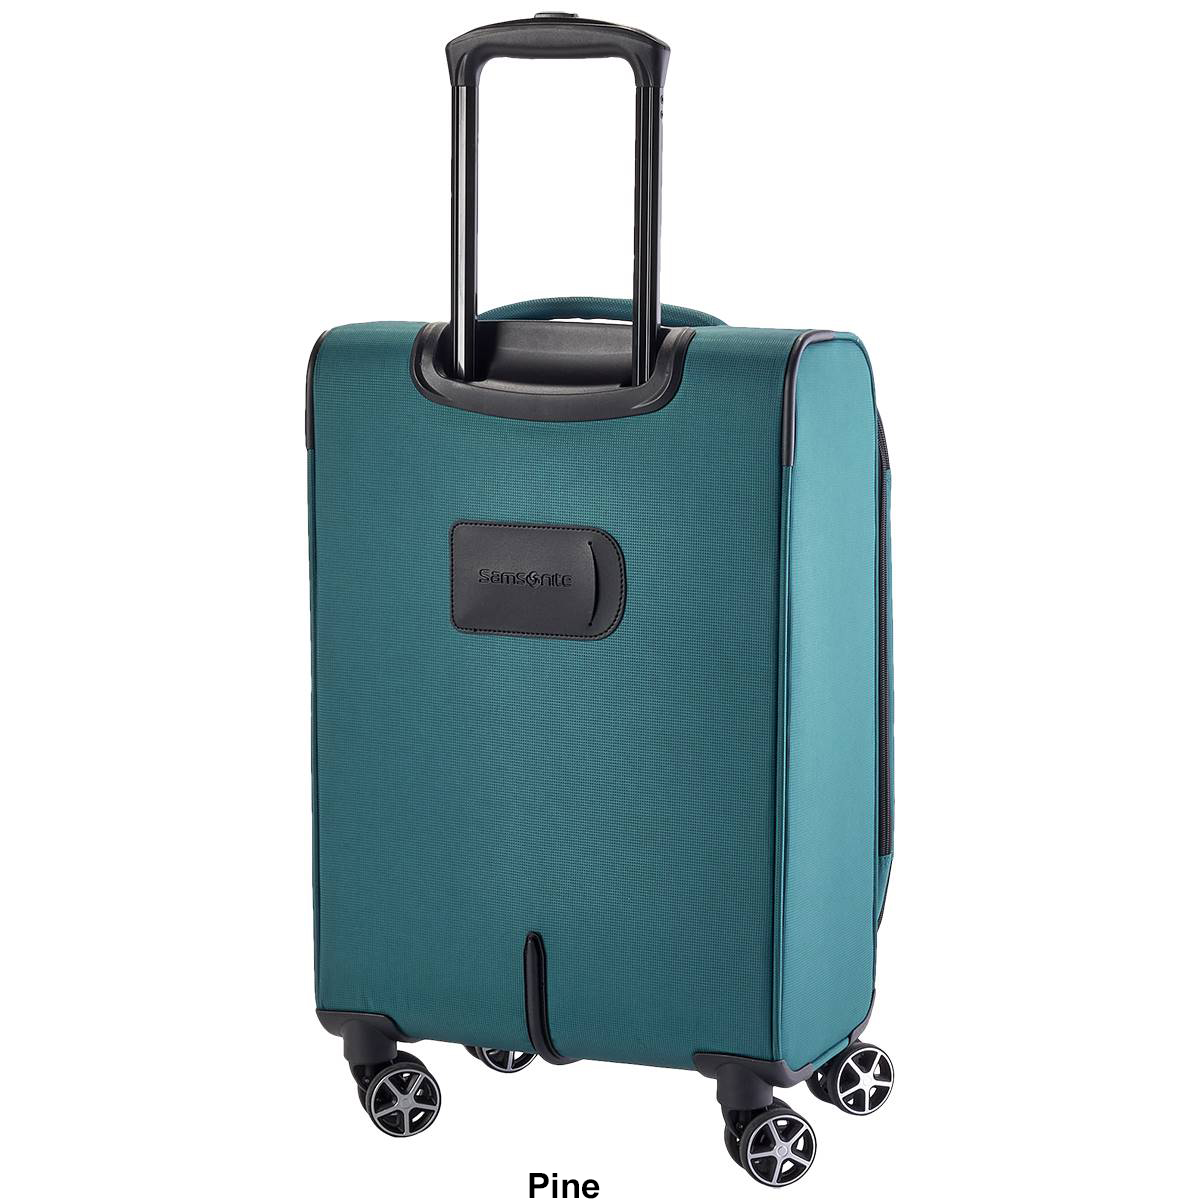 Samsonite Crusair LTE 21in. Carry-On Spinner Luggage